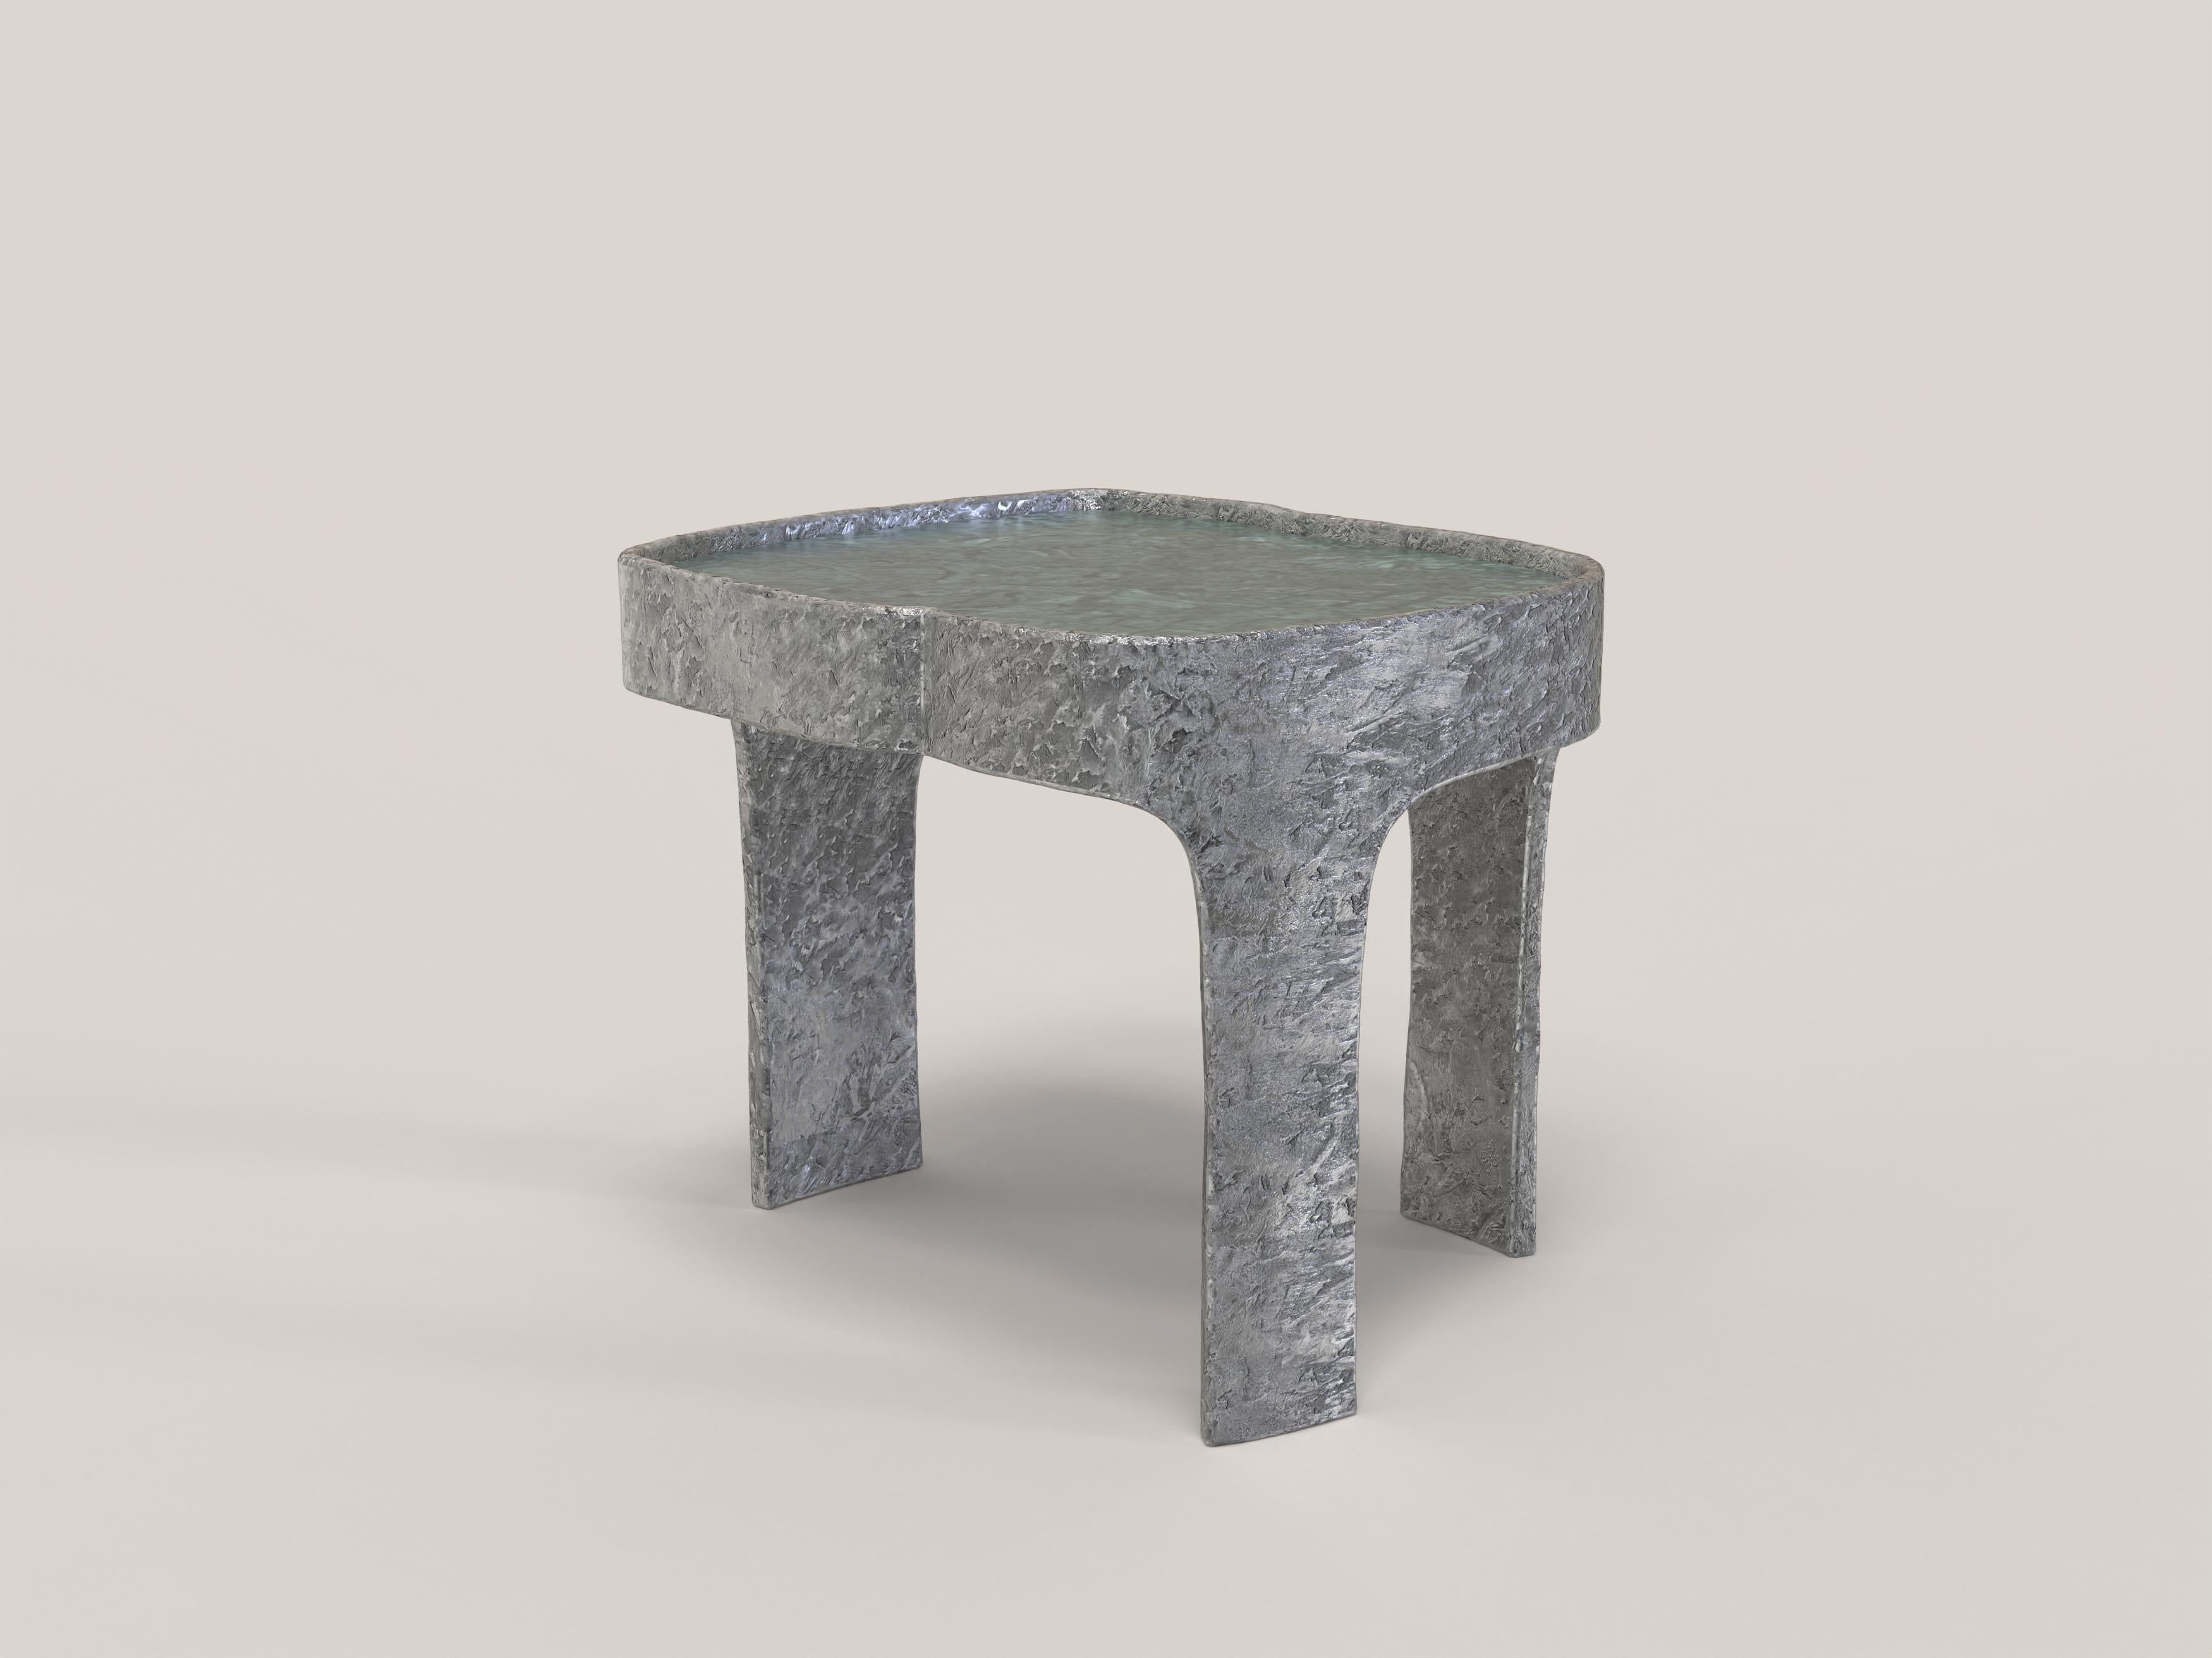 Italian Limited Edition Marble Aluminium Table, Sumatra V1 by Edizione Limitata For Sale